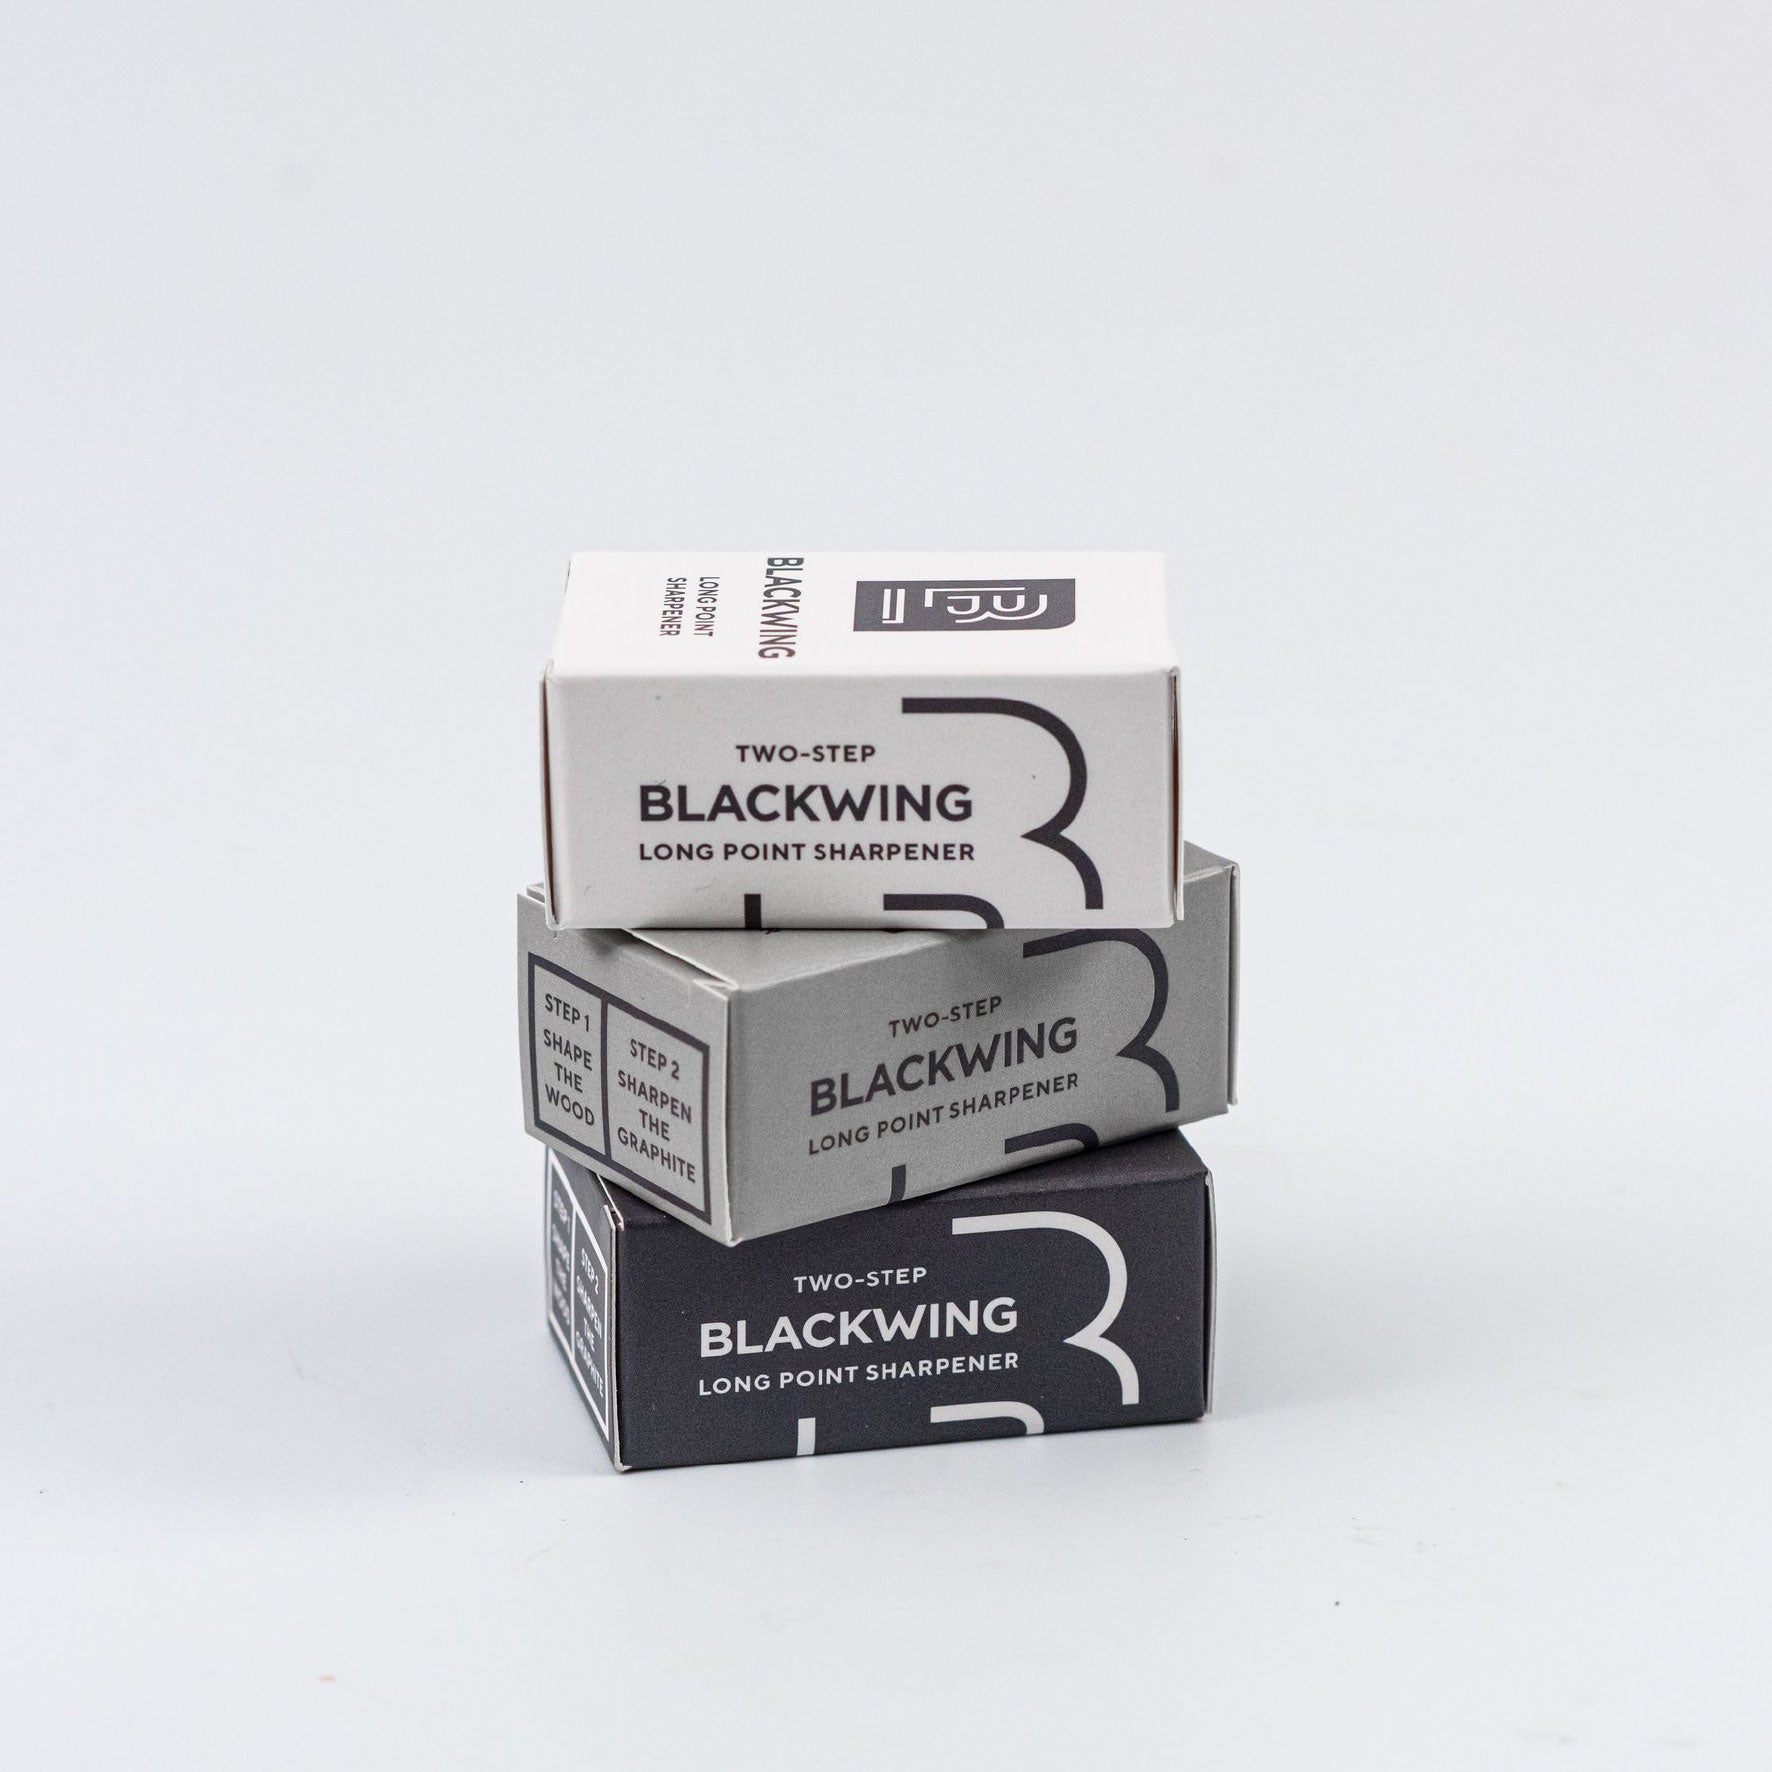 Palomino Blackwing - Sharpener - Long Point Two-Step - White